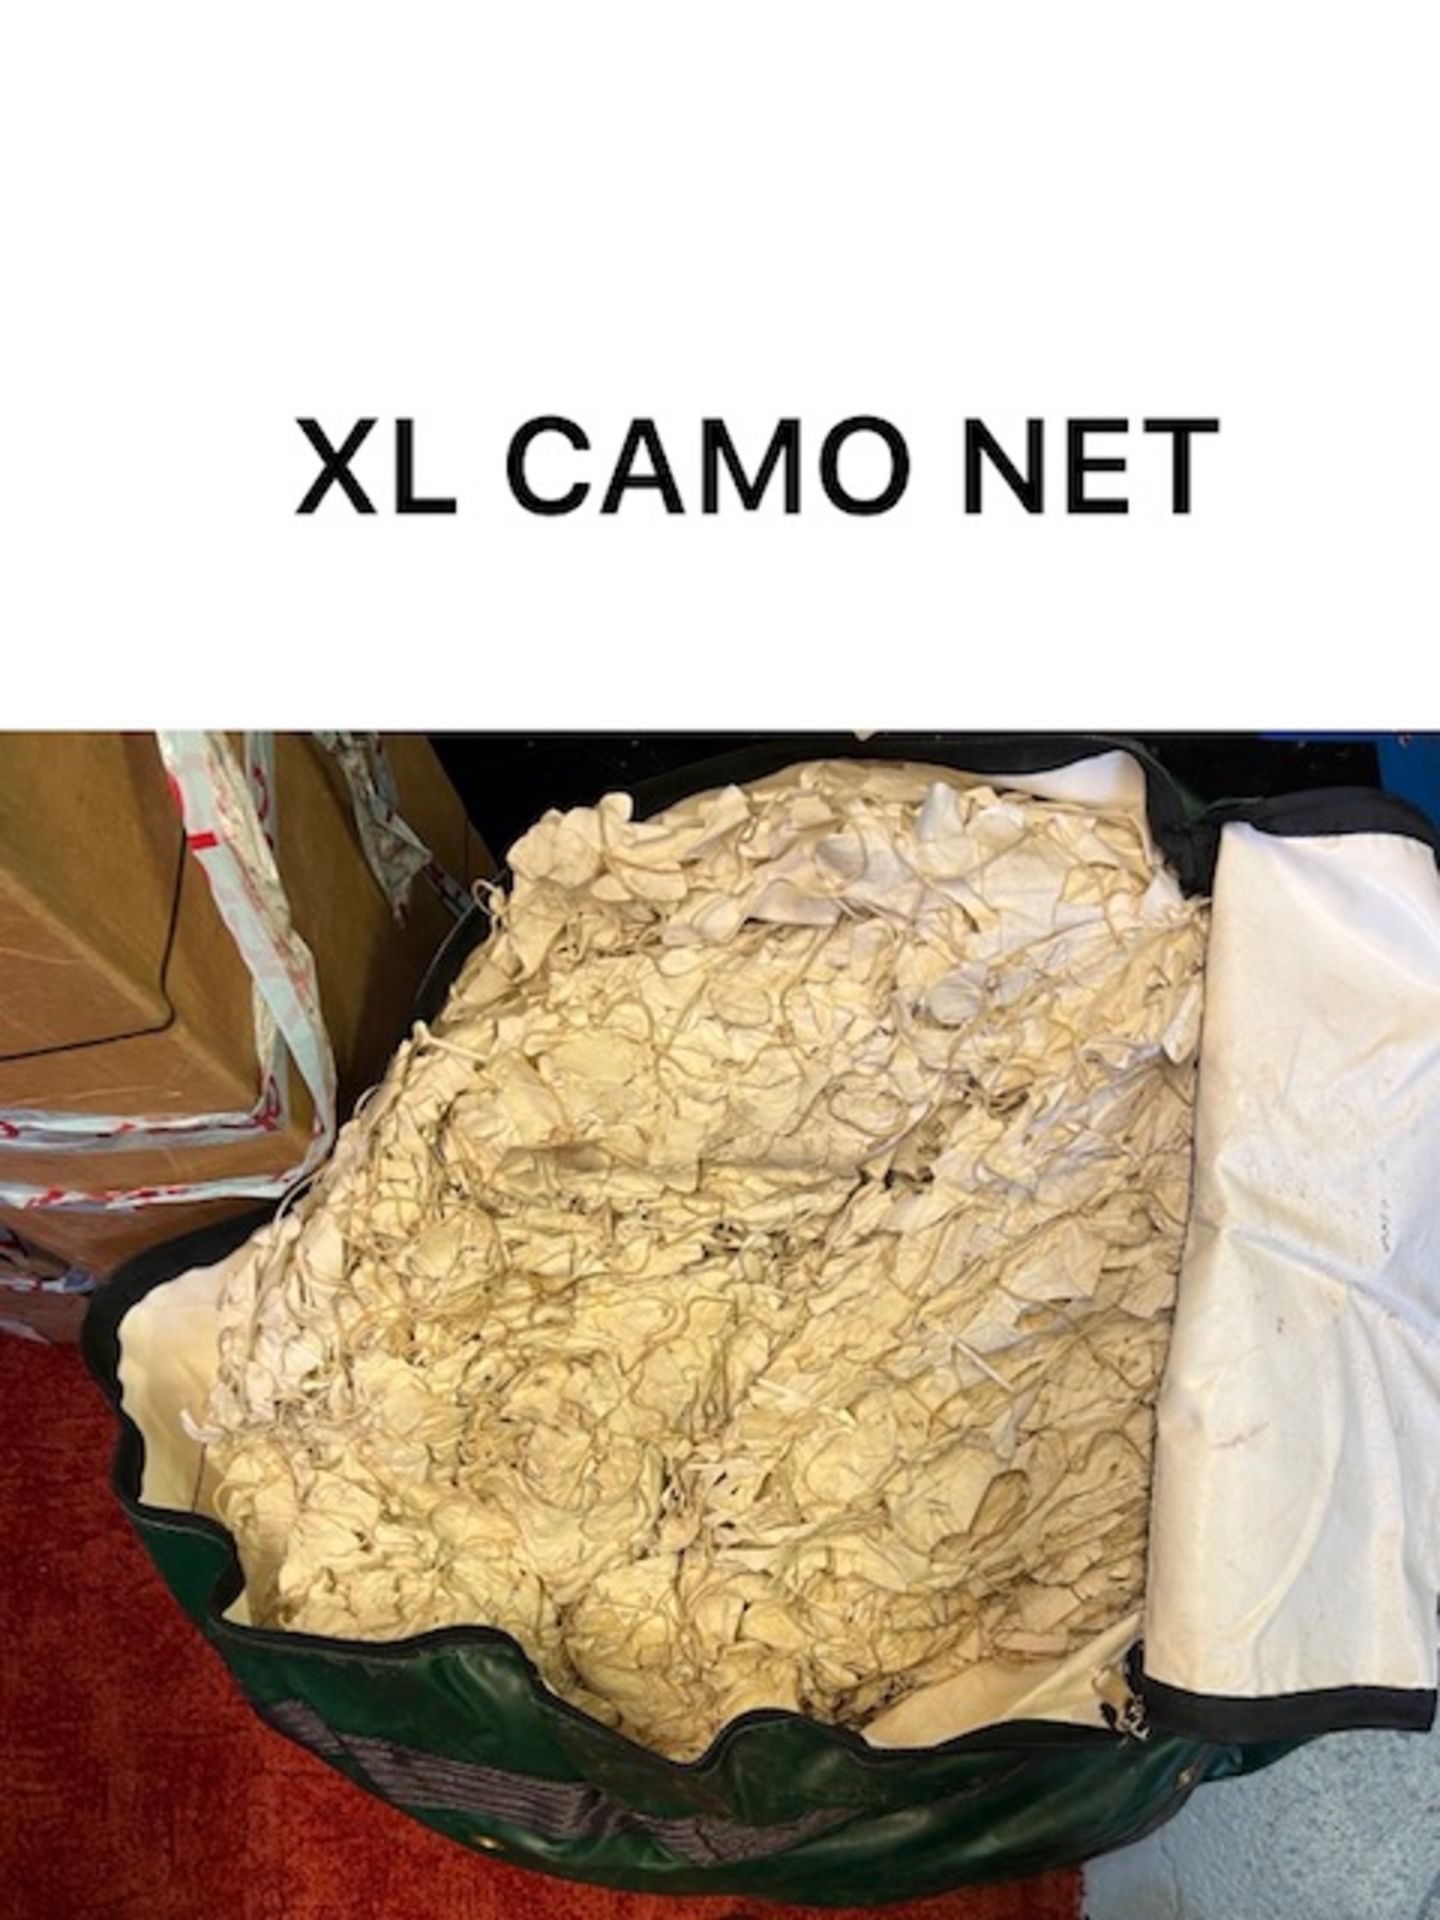 CW - XL Arctic/white camouflage net *NO VAT* - Image 2 of 2